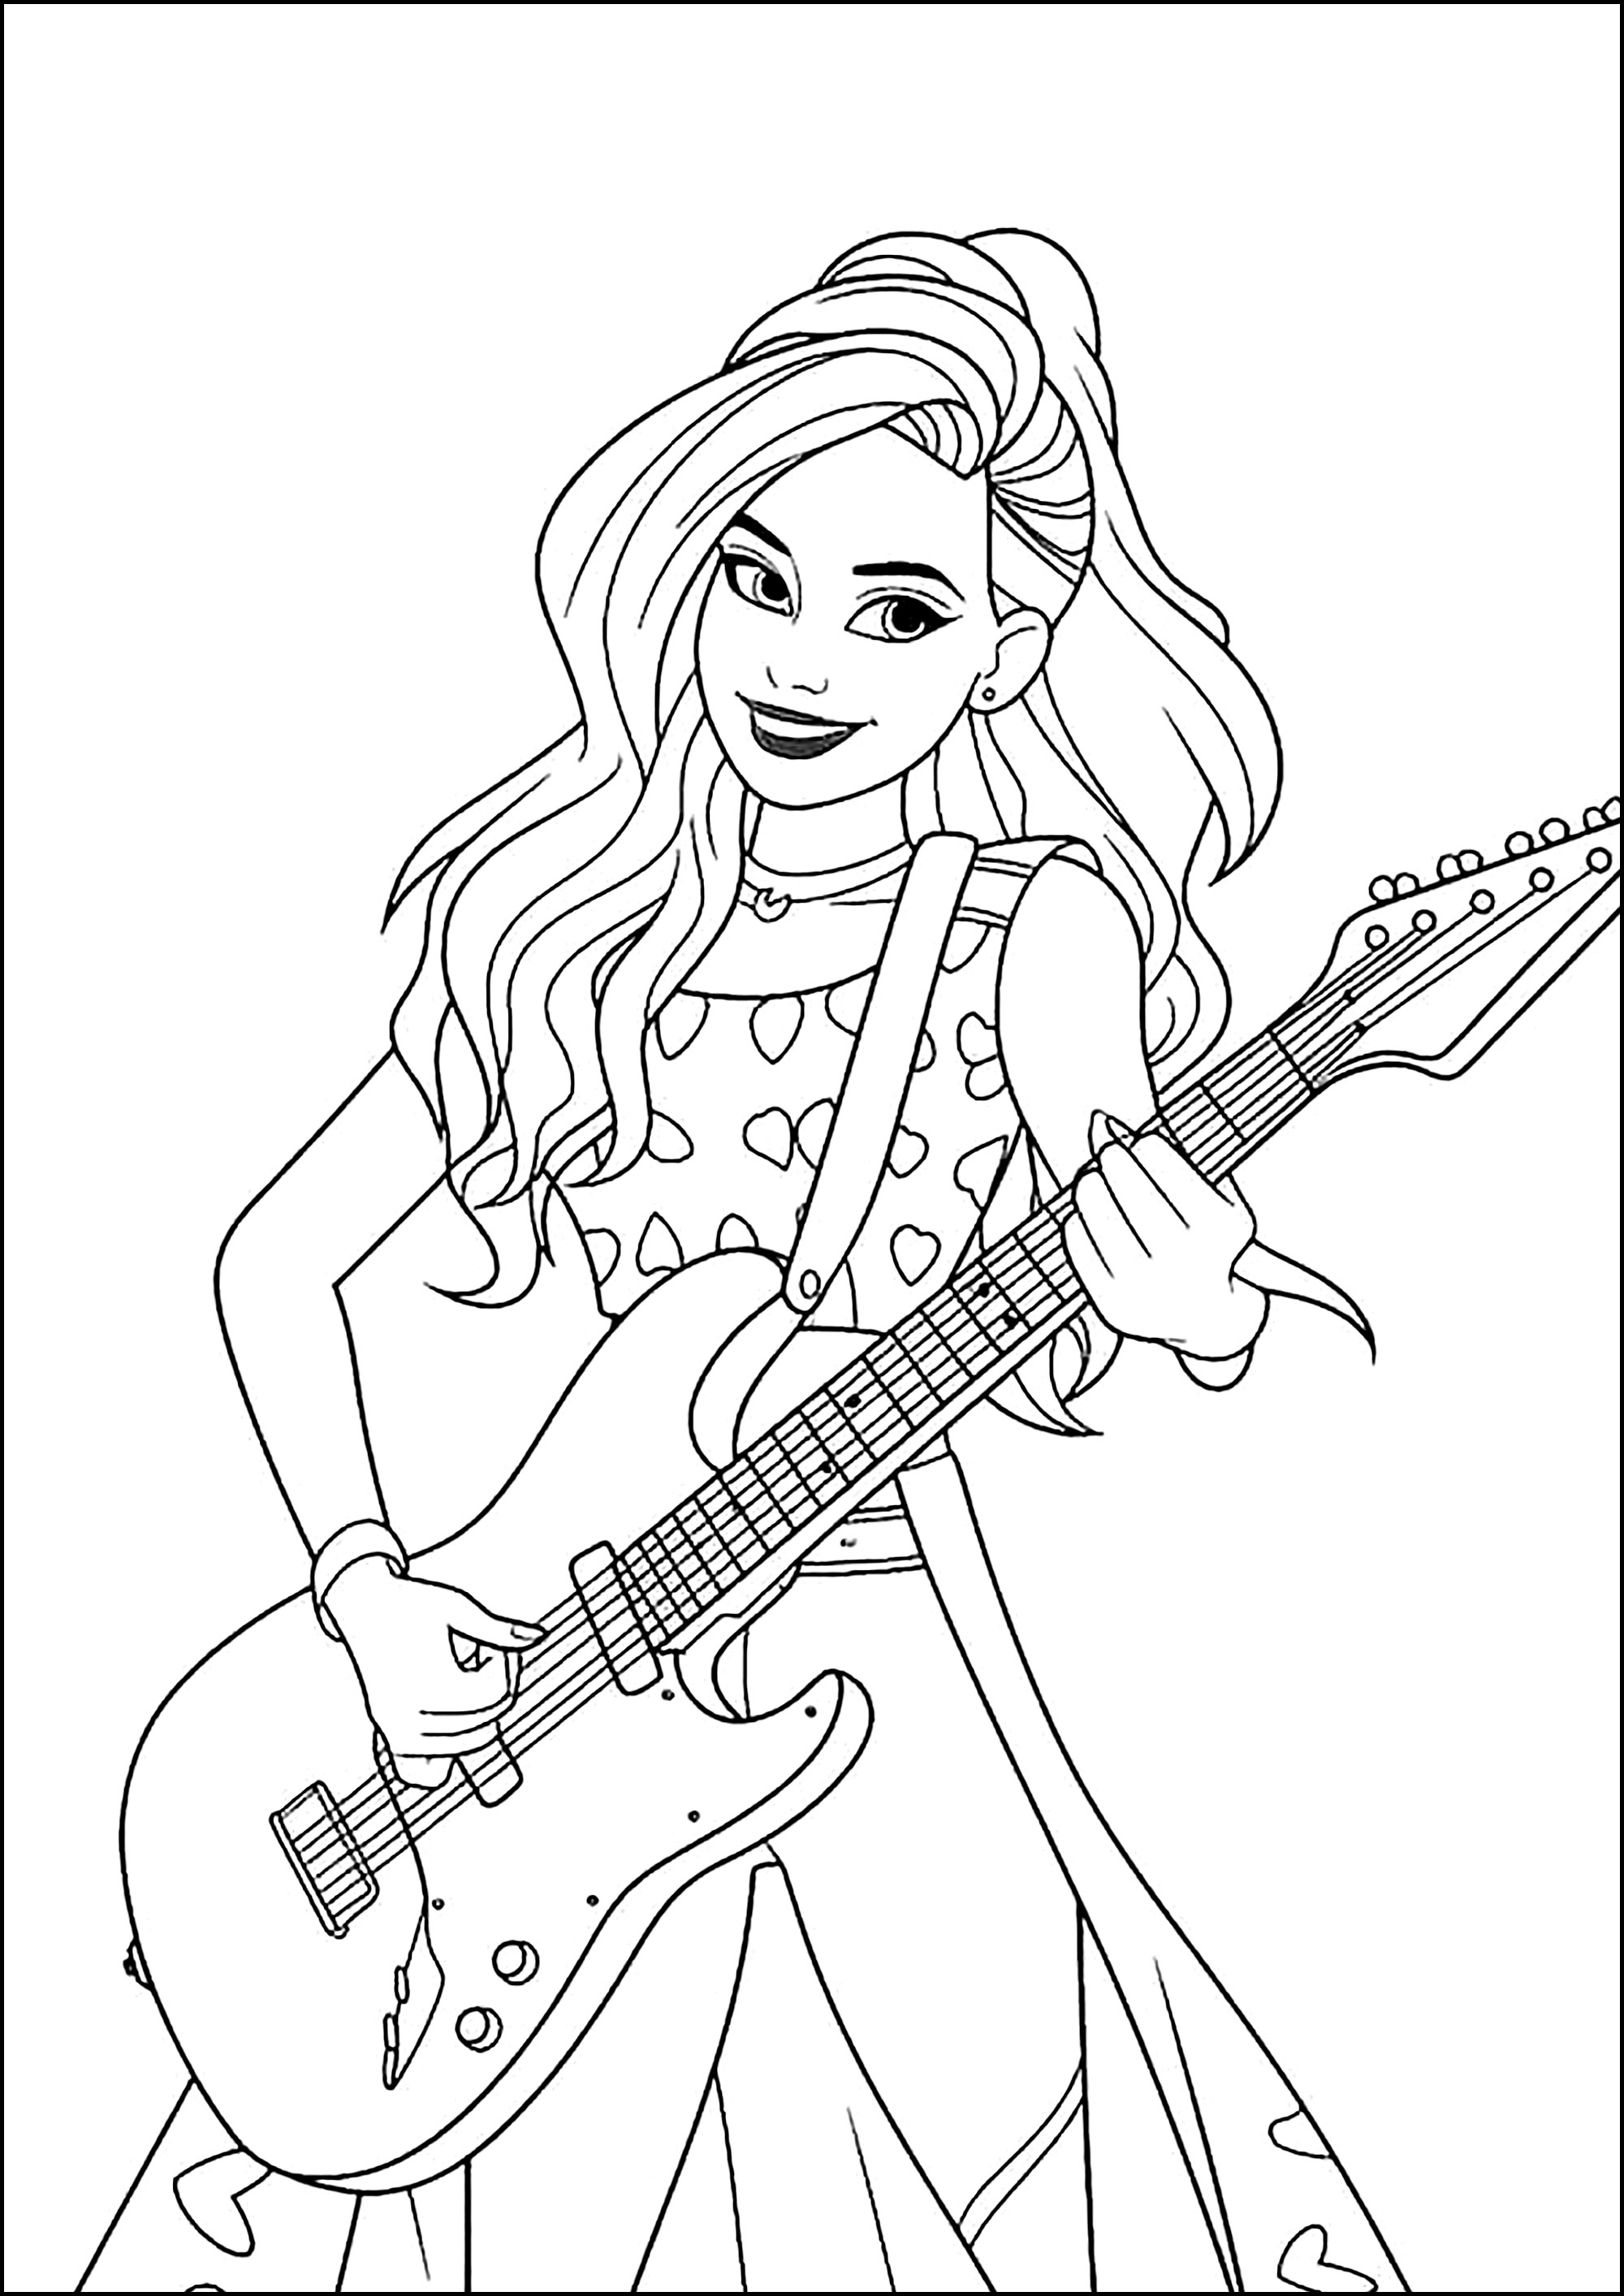 Barbie plays guitar - Barbie Kids Coloring Pages